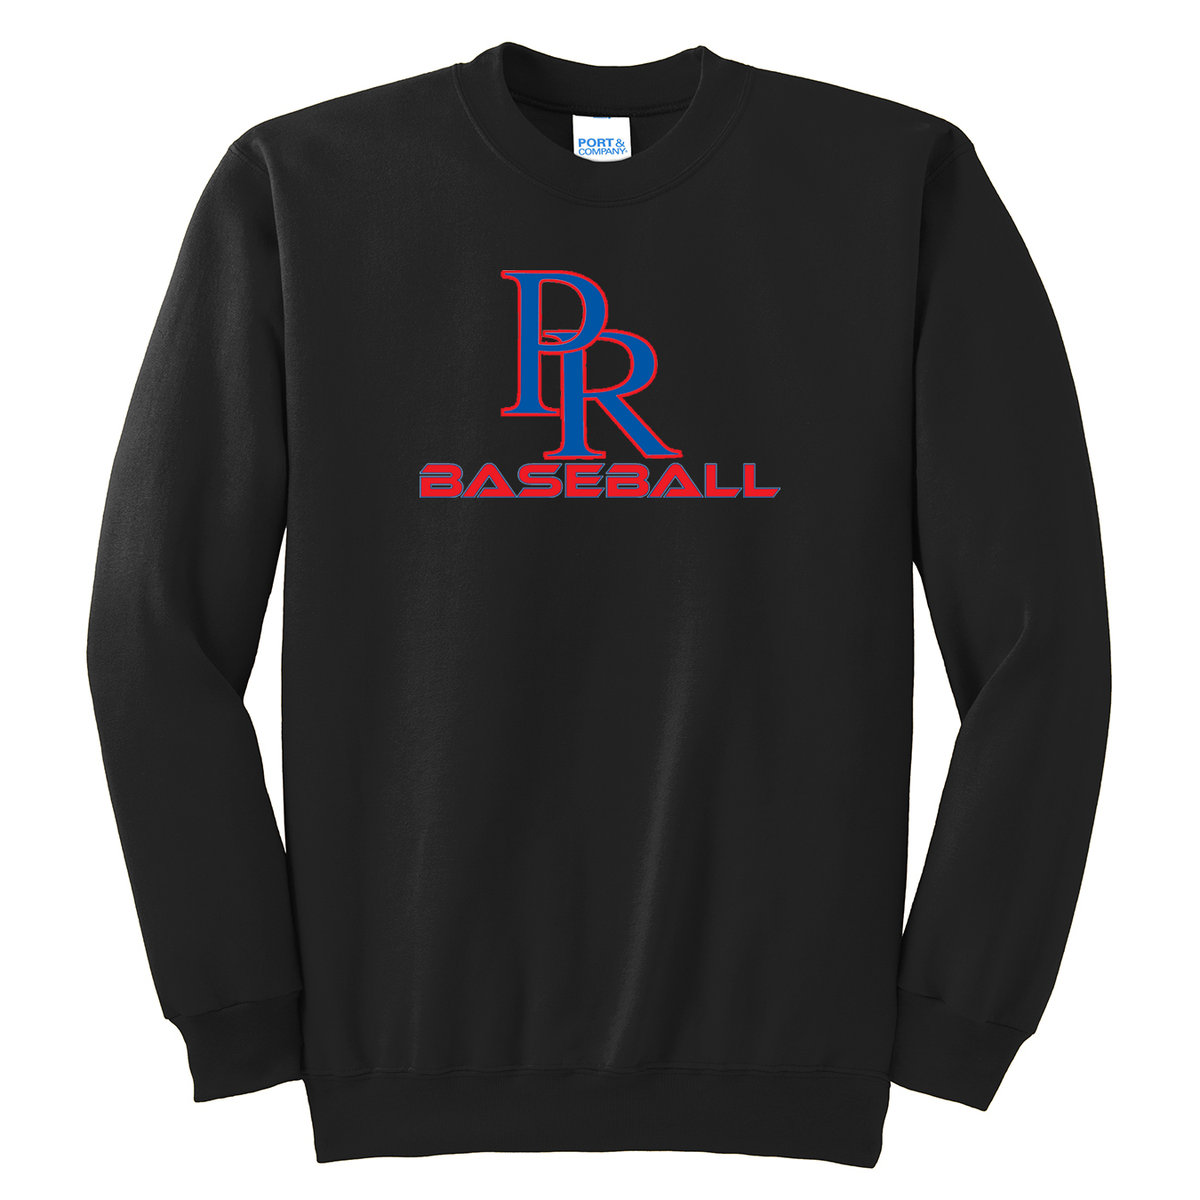 PR Baseball  Crew Neck Sweater